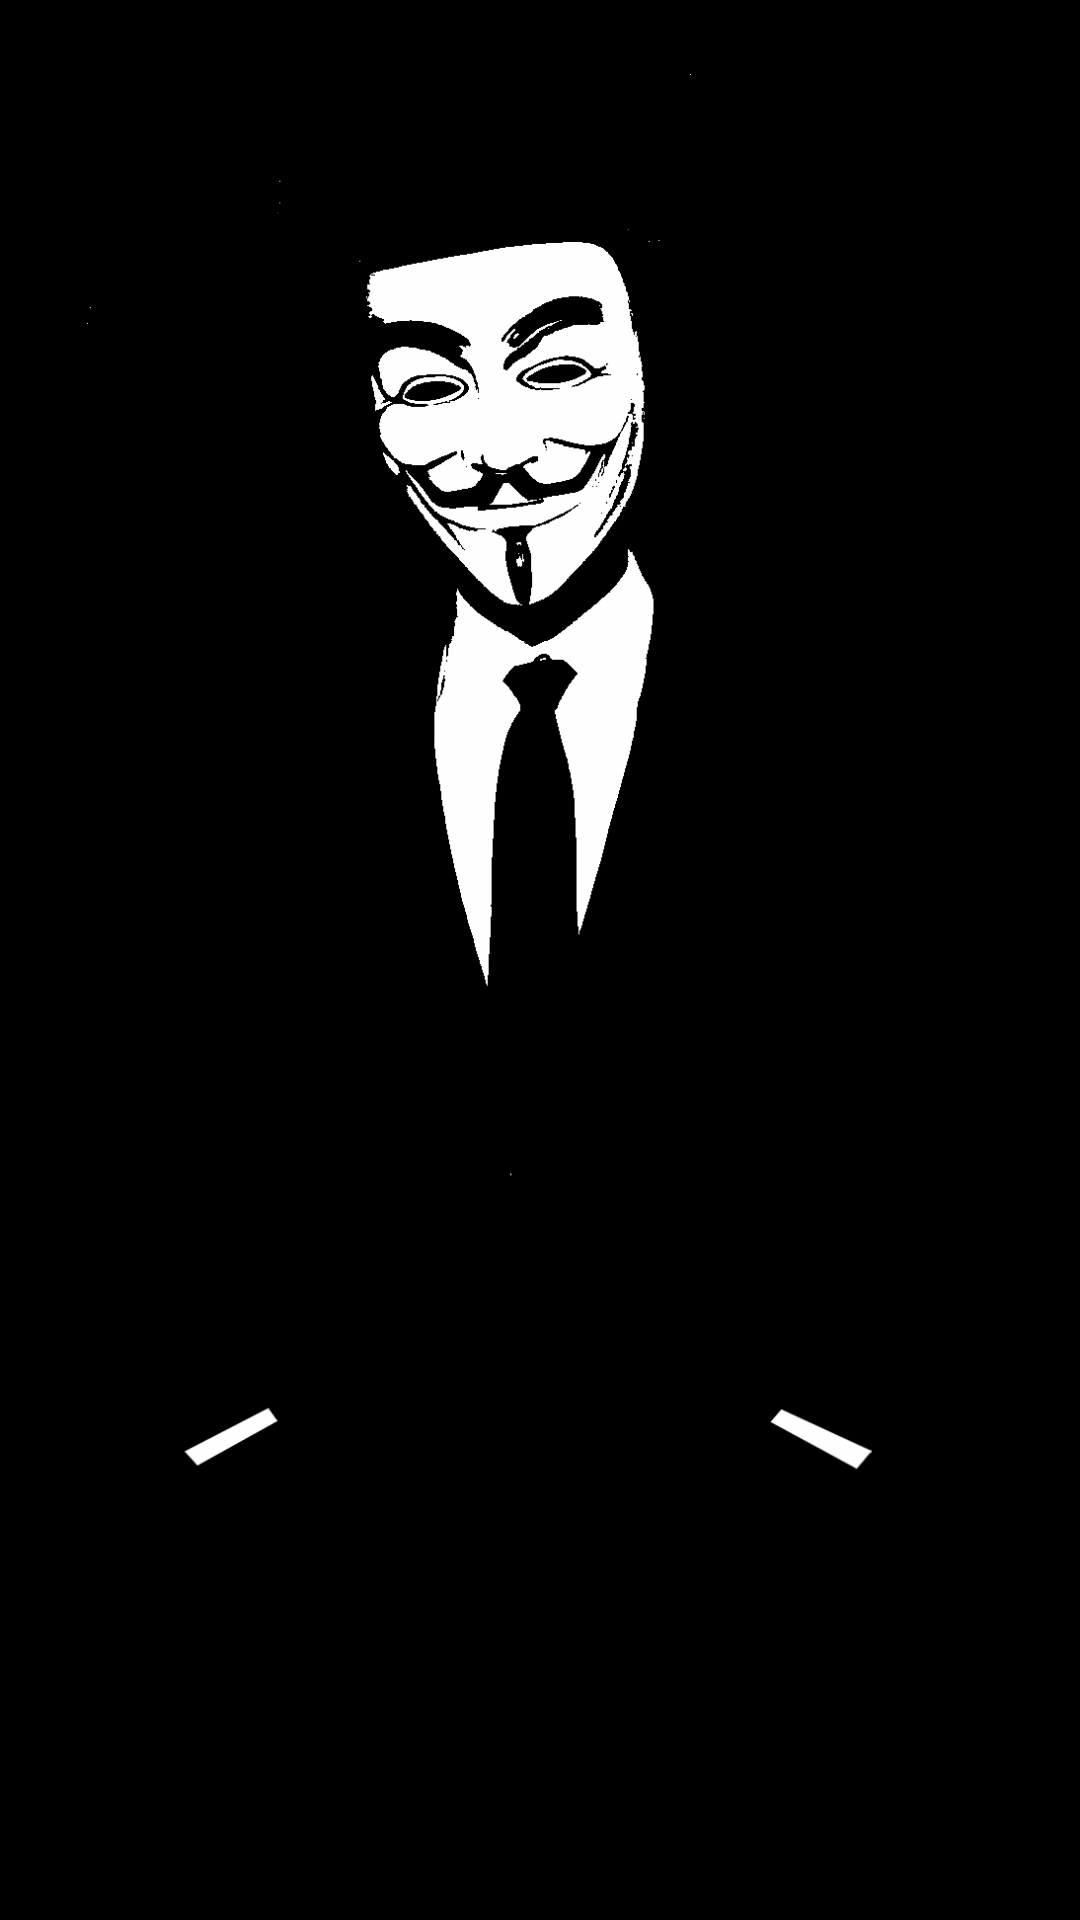 Anonymous wallpaper hd